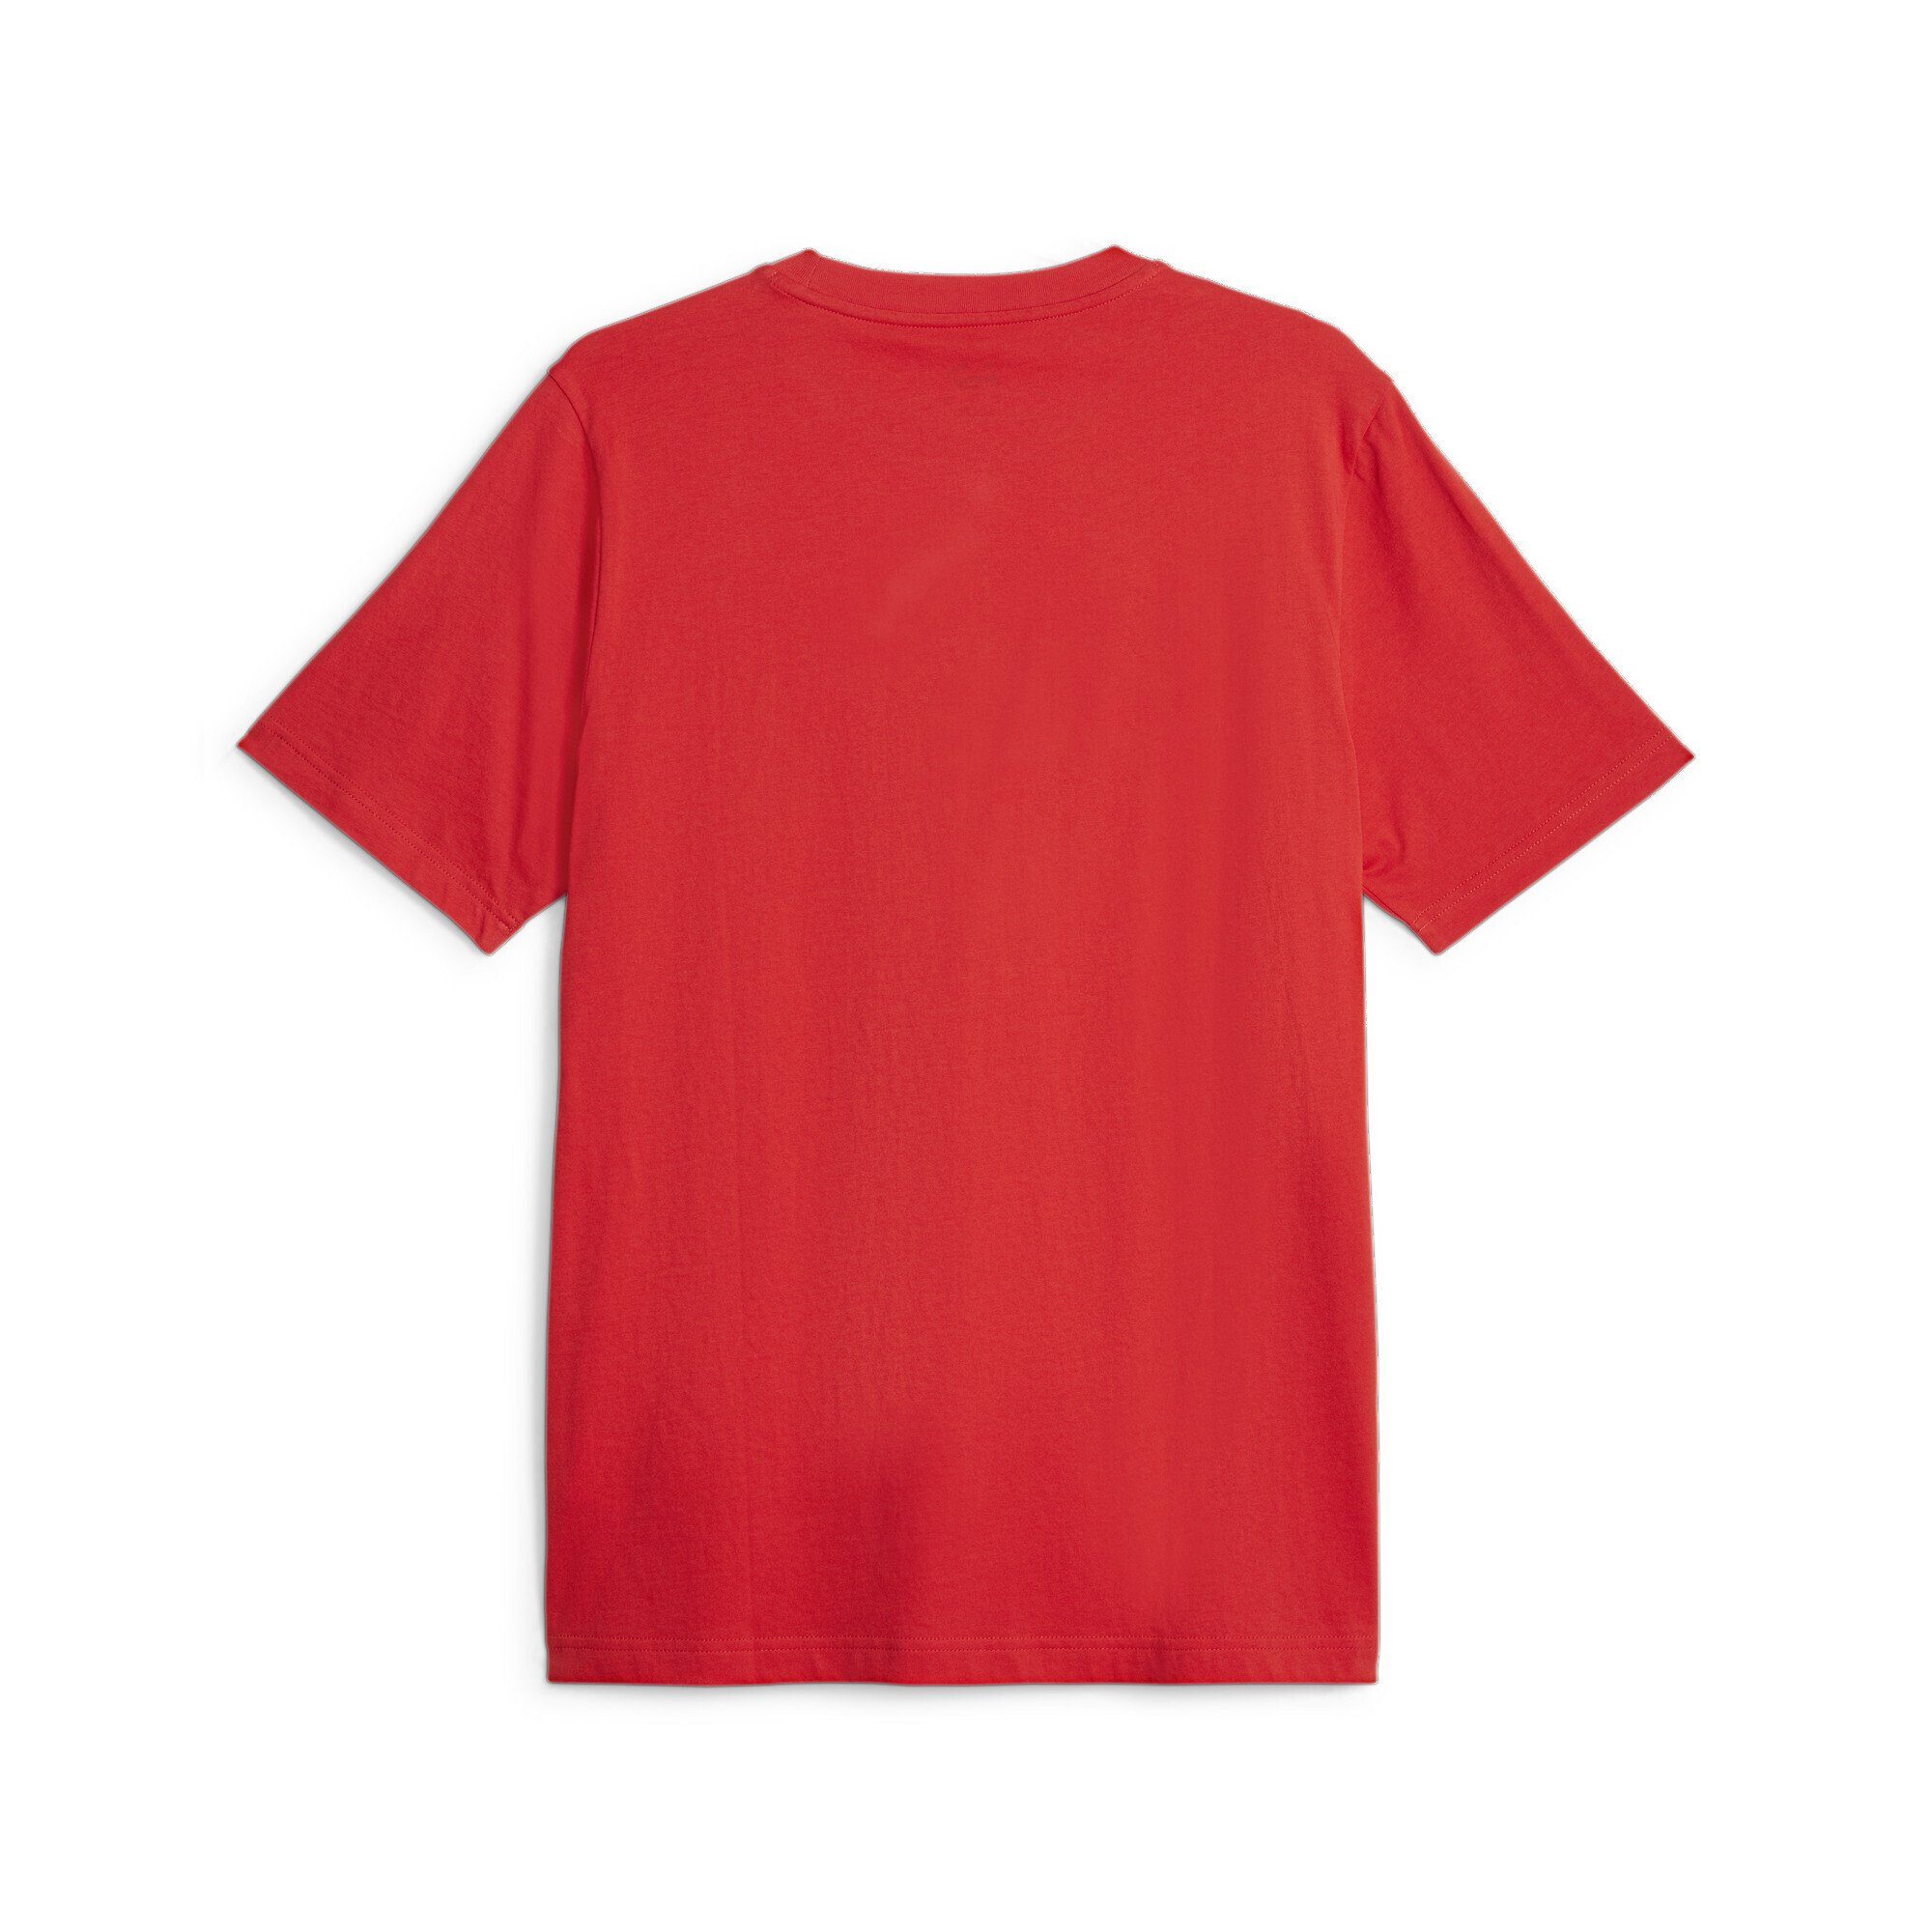 Time PUMA PUMA For T-Shirt SQUAD T-Shirt Herren Red All